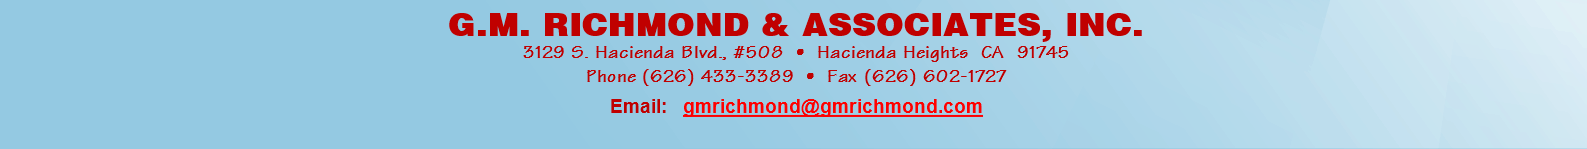 G.M. RICHMOND & ASSOCIATES, INC.
3129 S. Hacienda Blvd., #508  •  Hacienda Heights  CA  91745
Phone (626) 433-3389  •  Fax (626) 602-1727
Email:   gmrichmond@gmrichmond.com
